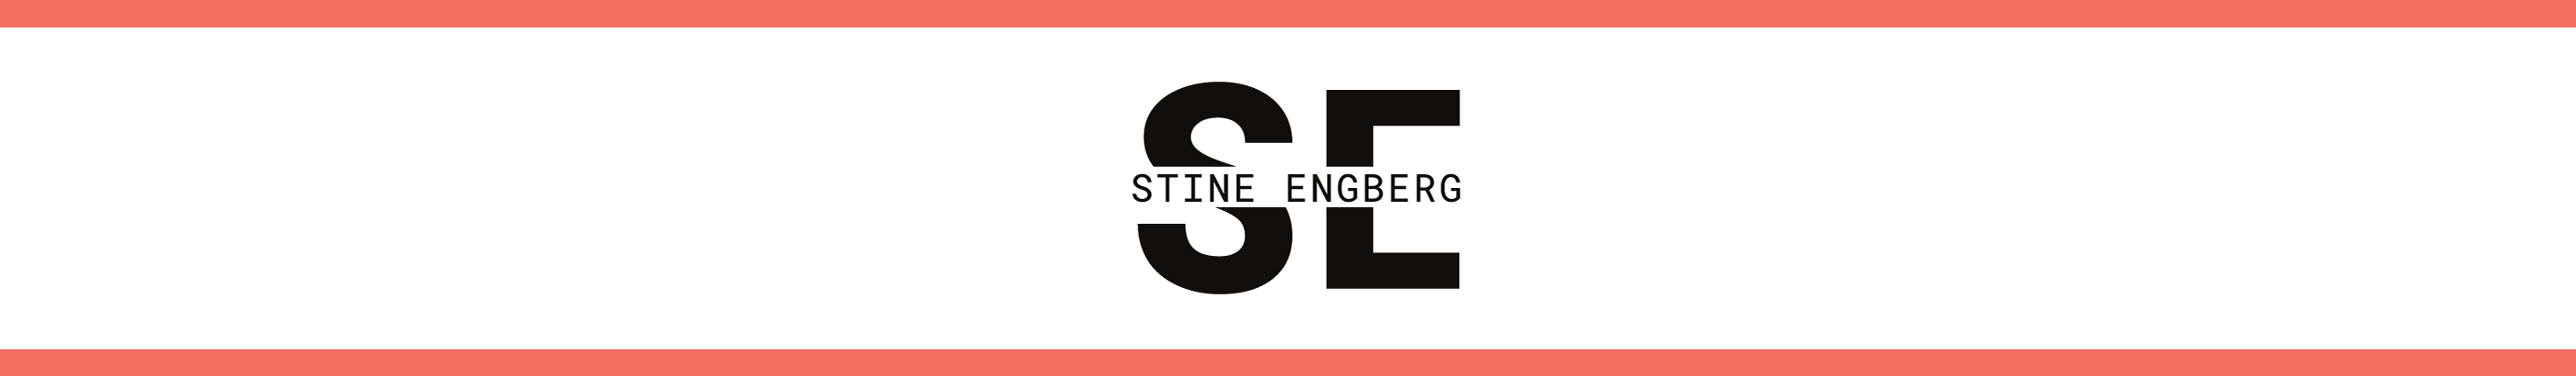 Stine Engberg's profile banner